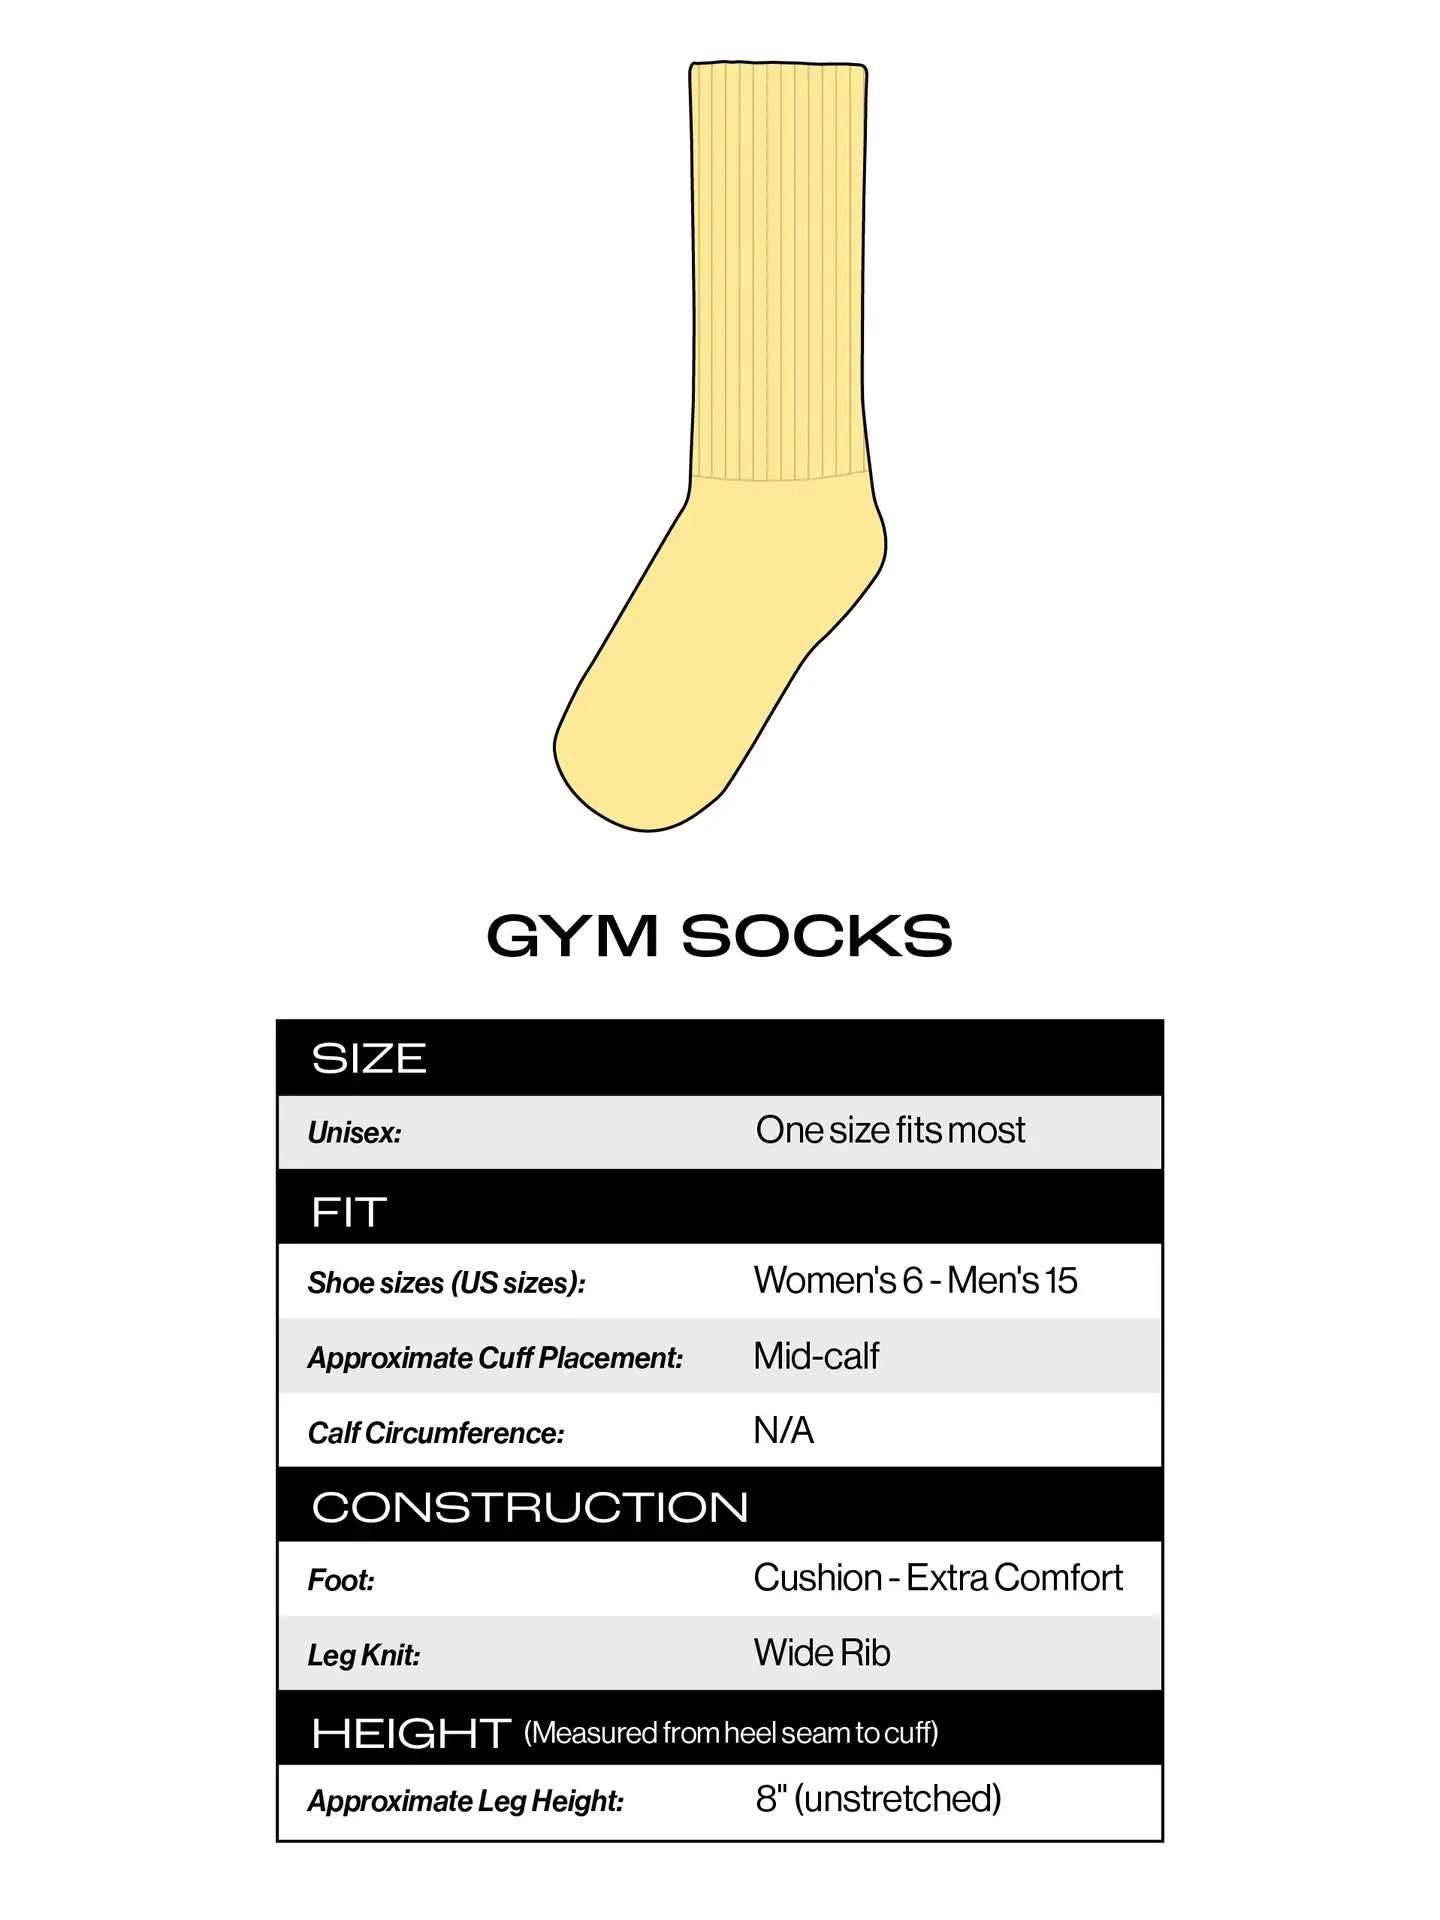 I ❤️ Halloween Gym Crew Socks